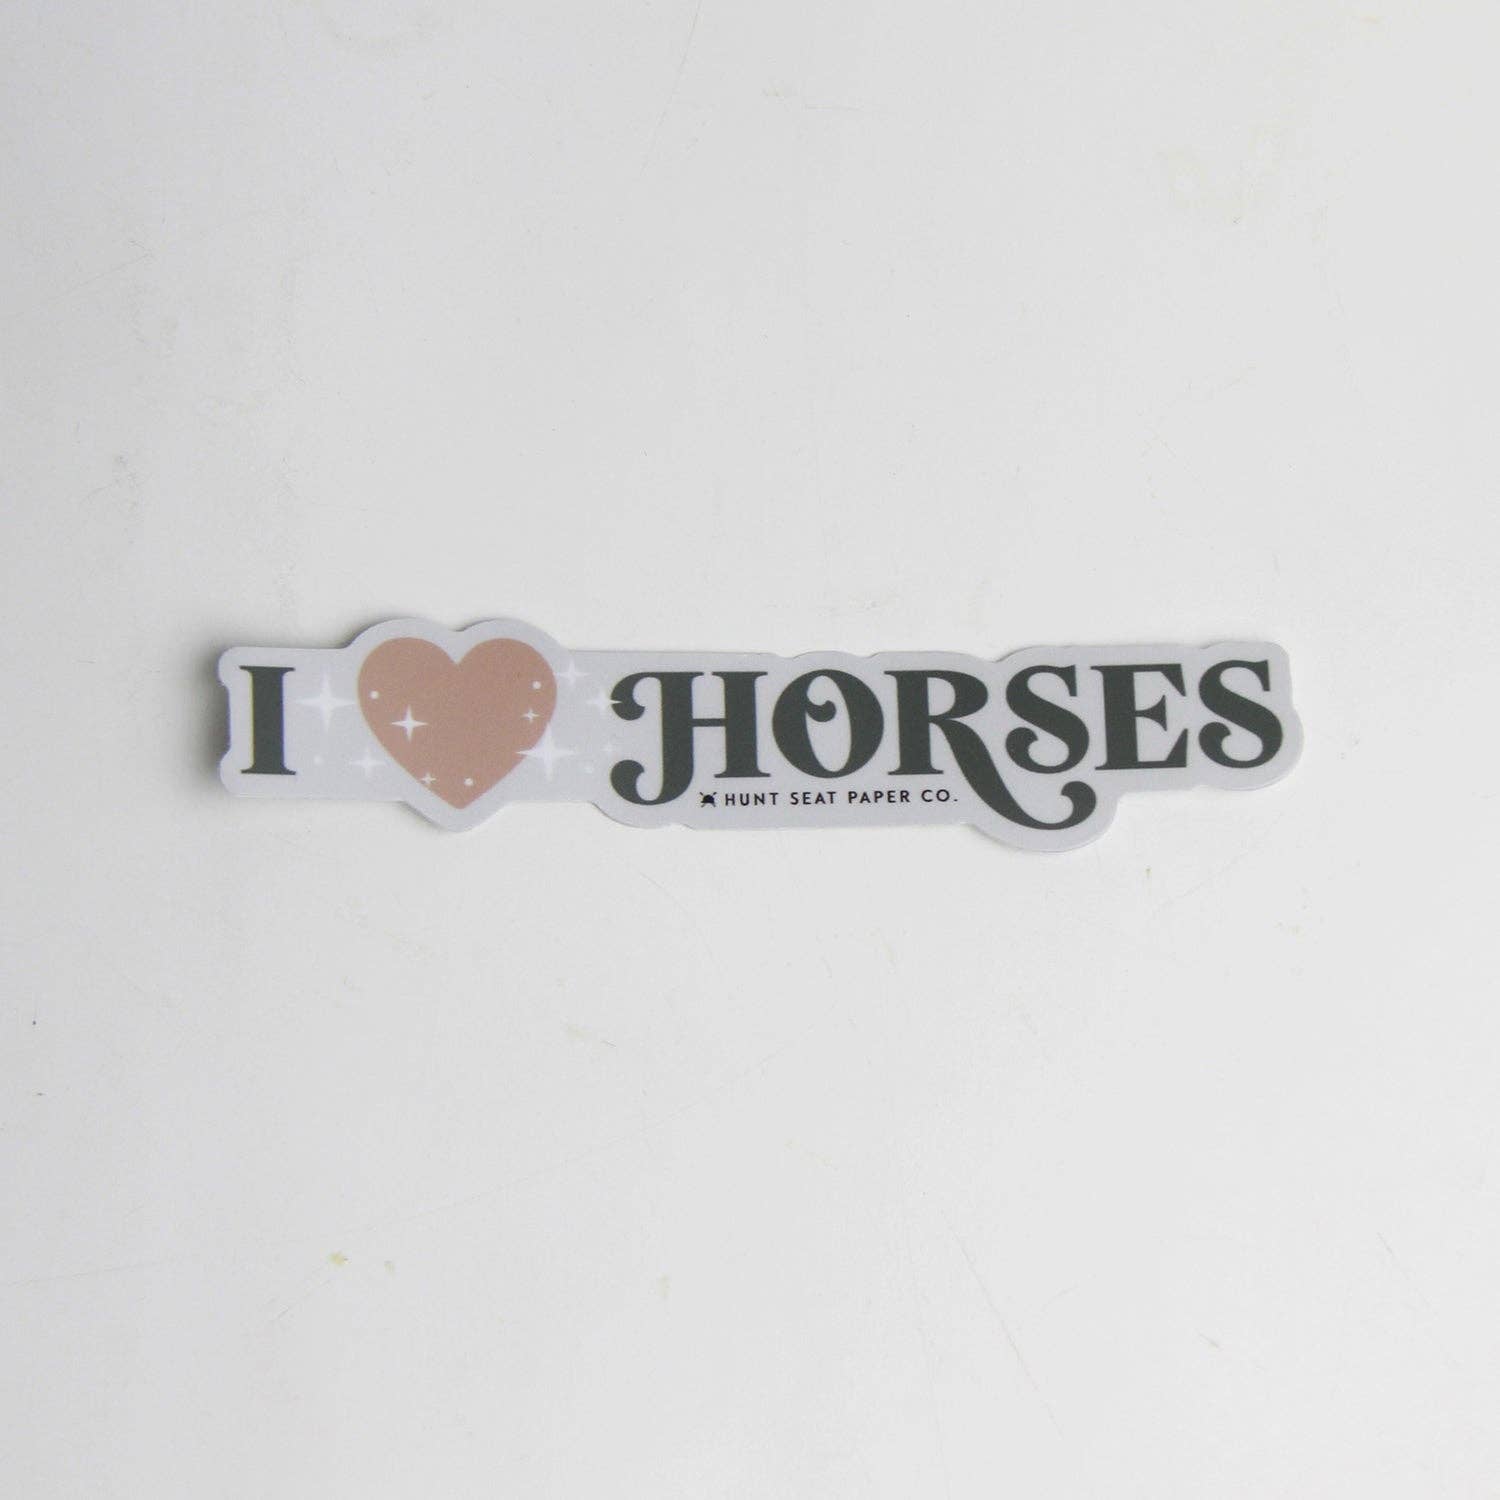 Hunt Seat Paper Co. - I Love Horses Sticker